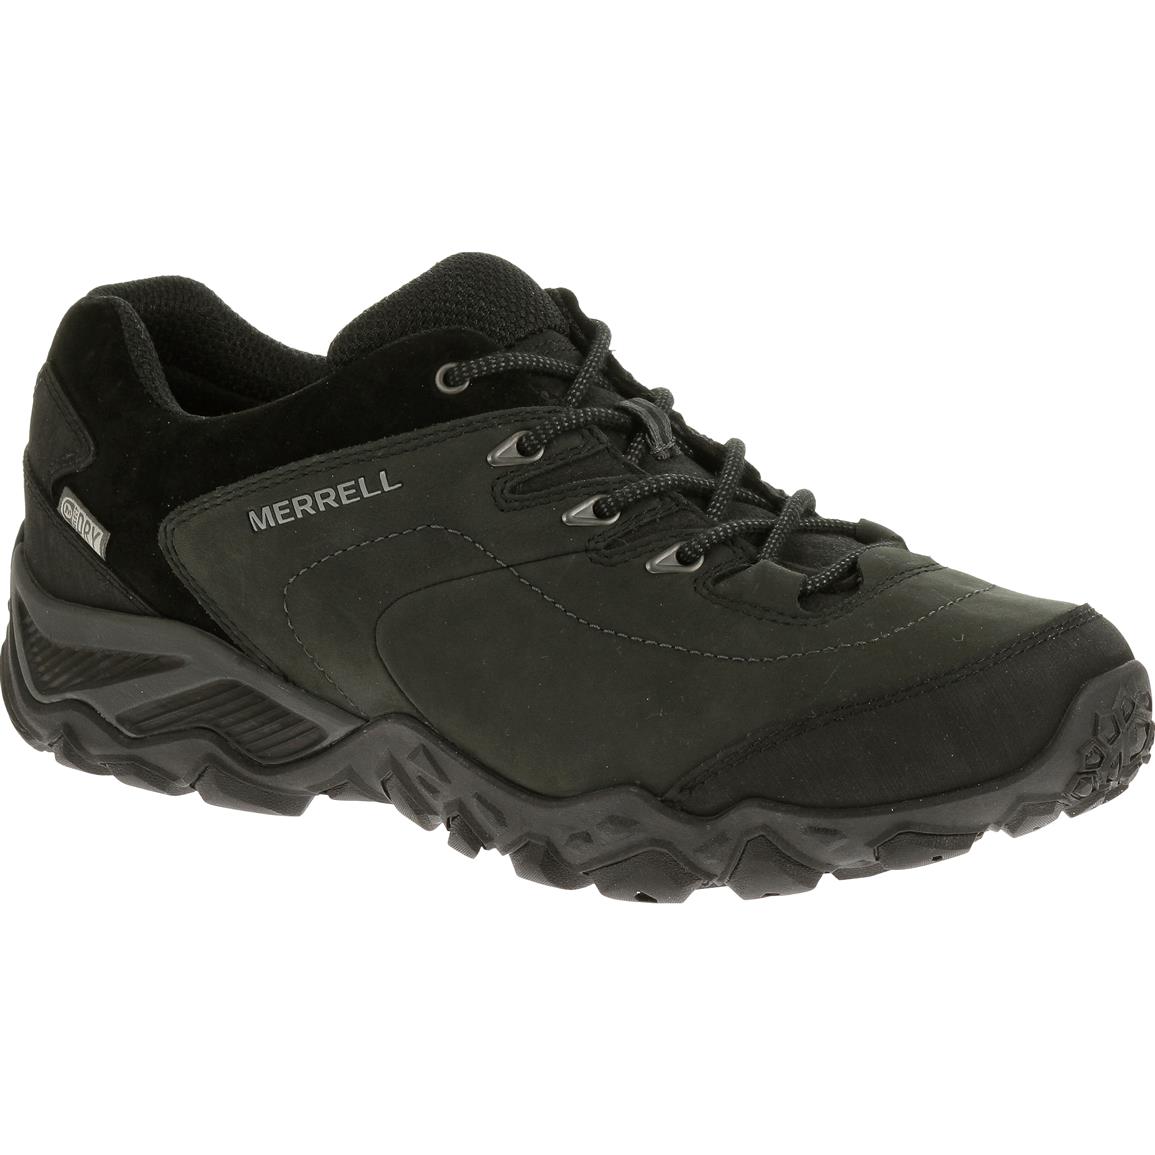 Merrell Chameleon Shift Trek Hiking Shoes, Waterproof - 654069, Hiking ...